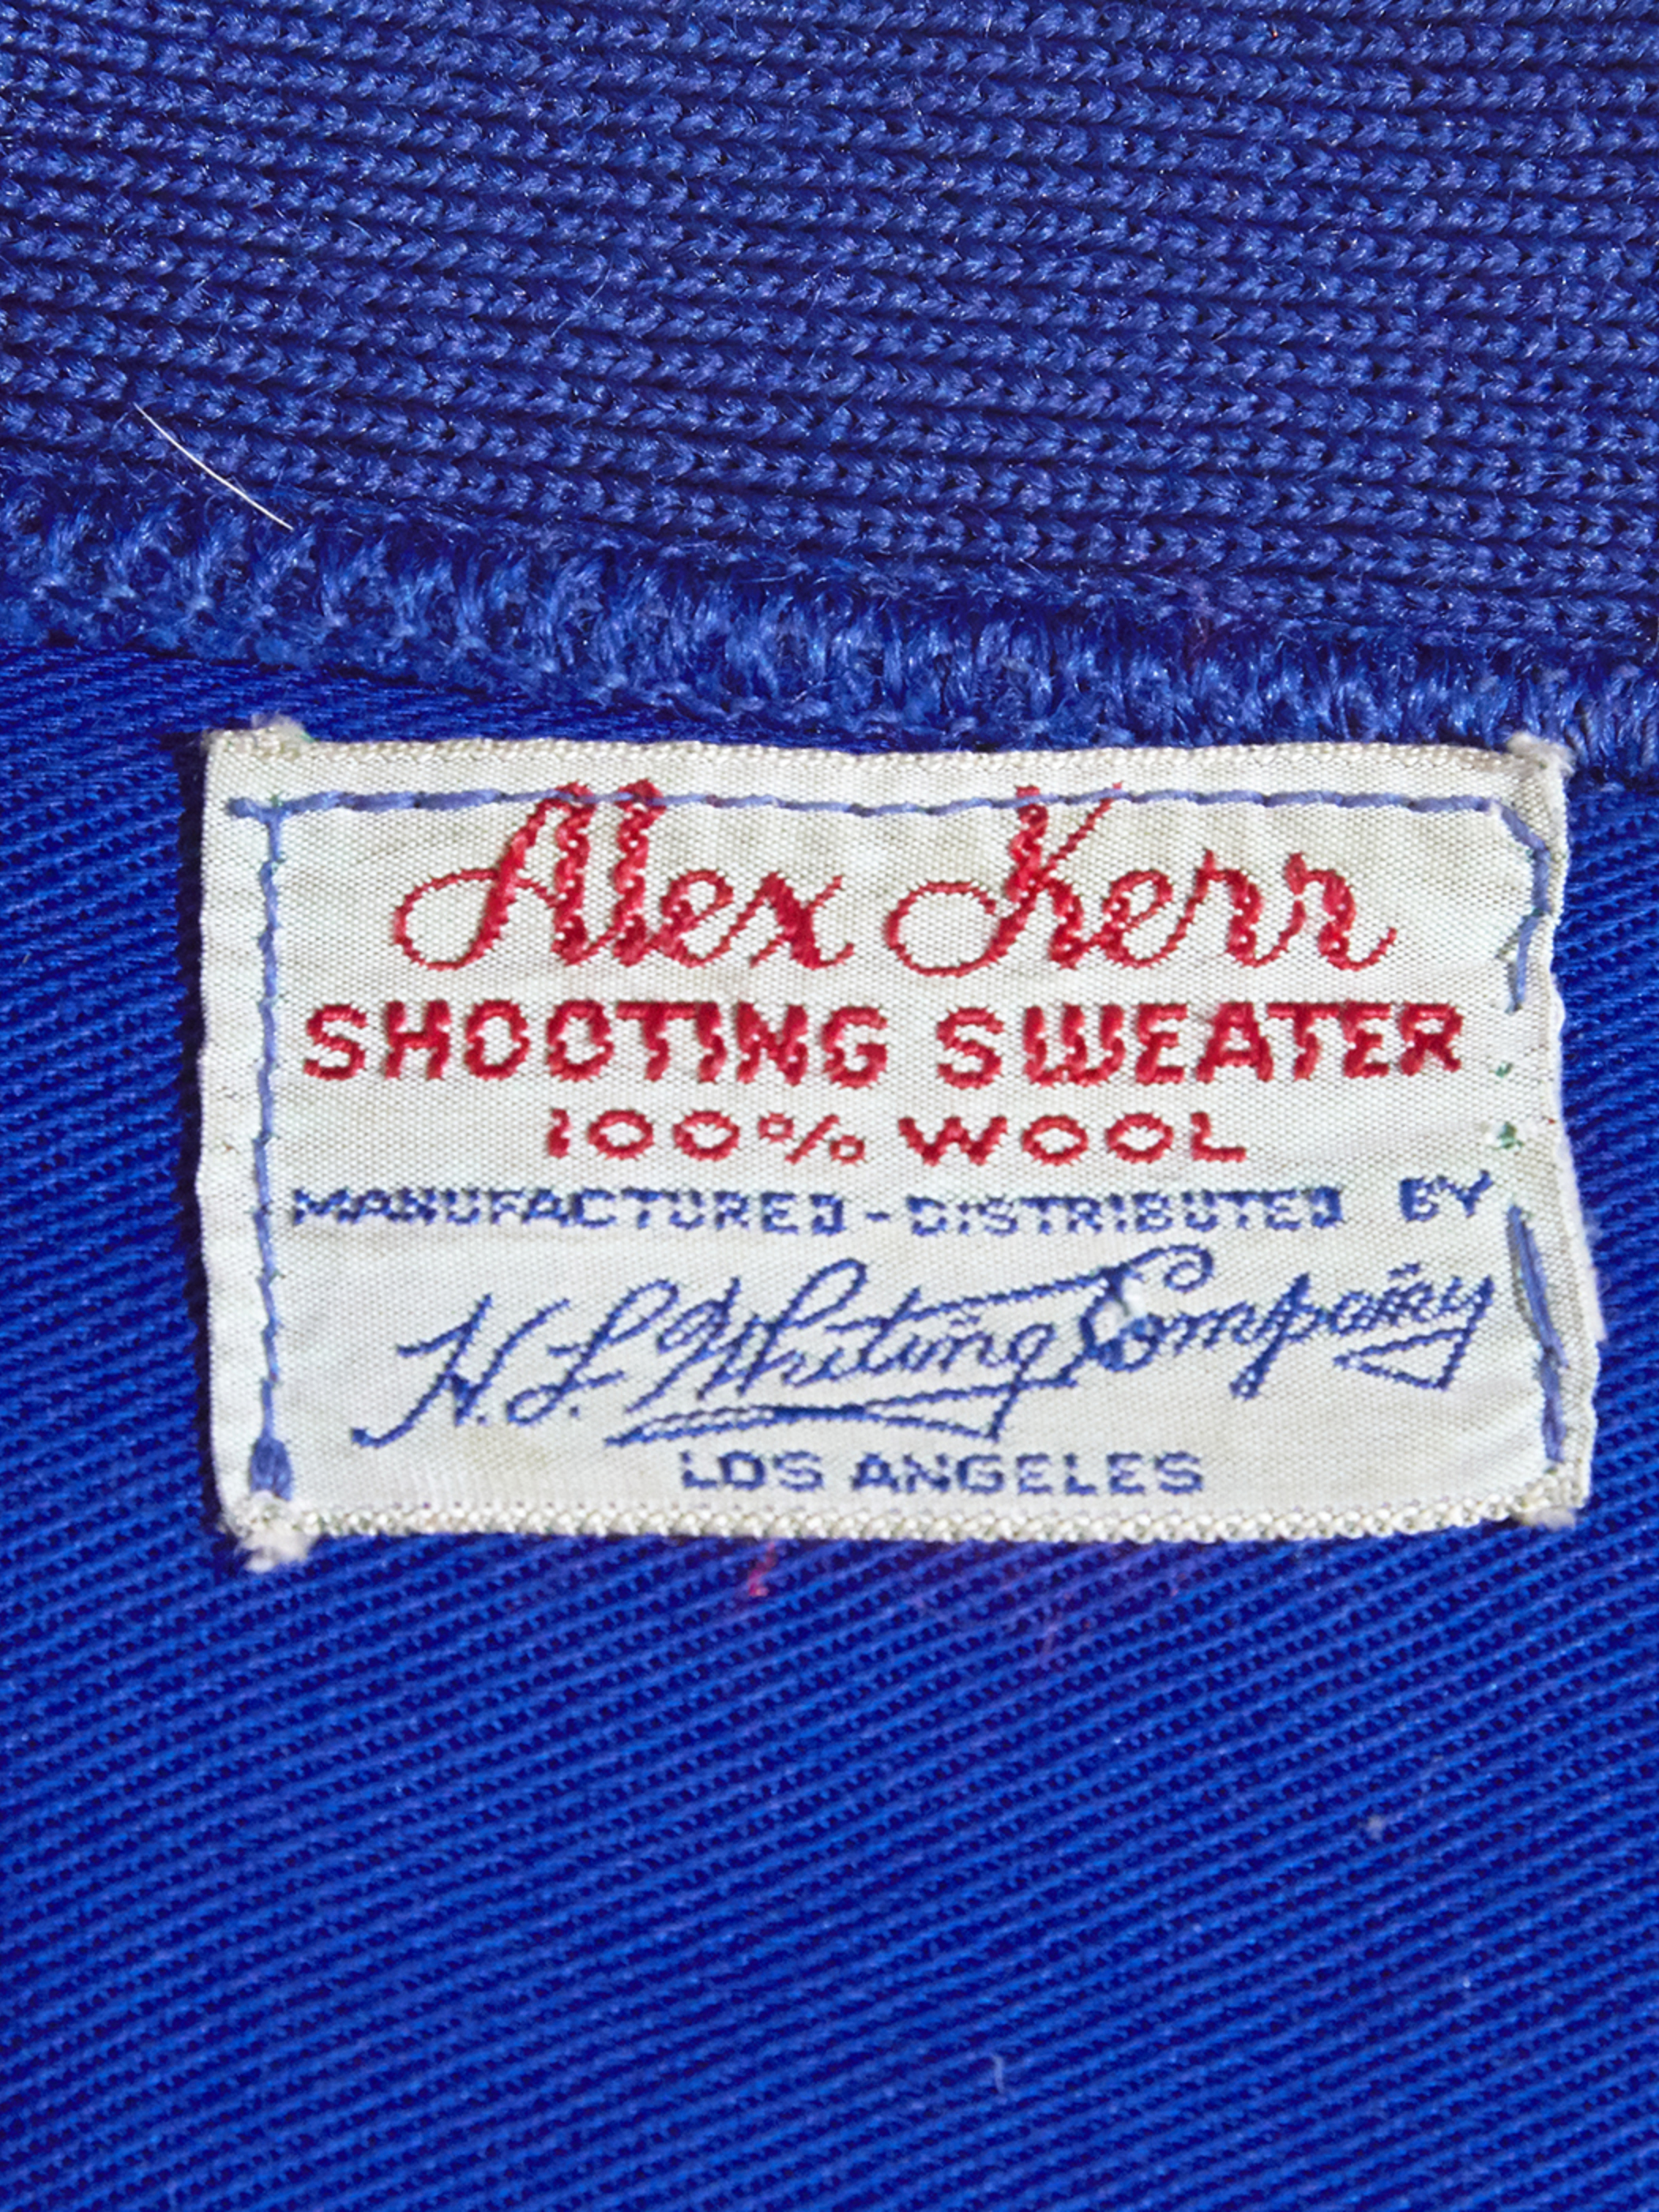 1960s "Alex Kern" wool shooting knit -BLUE-